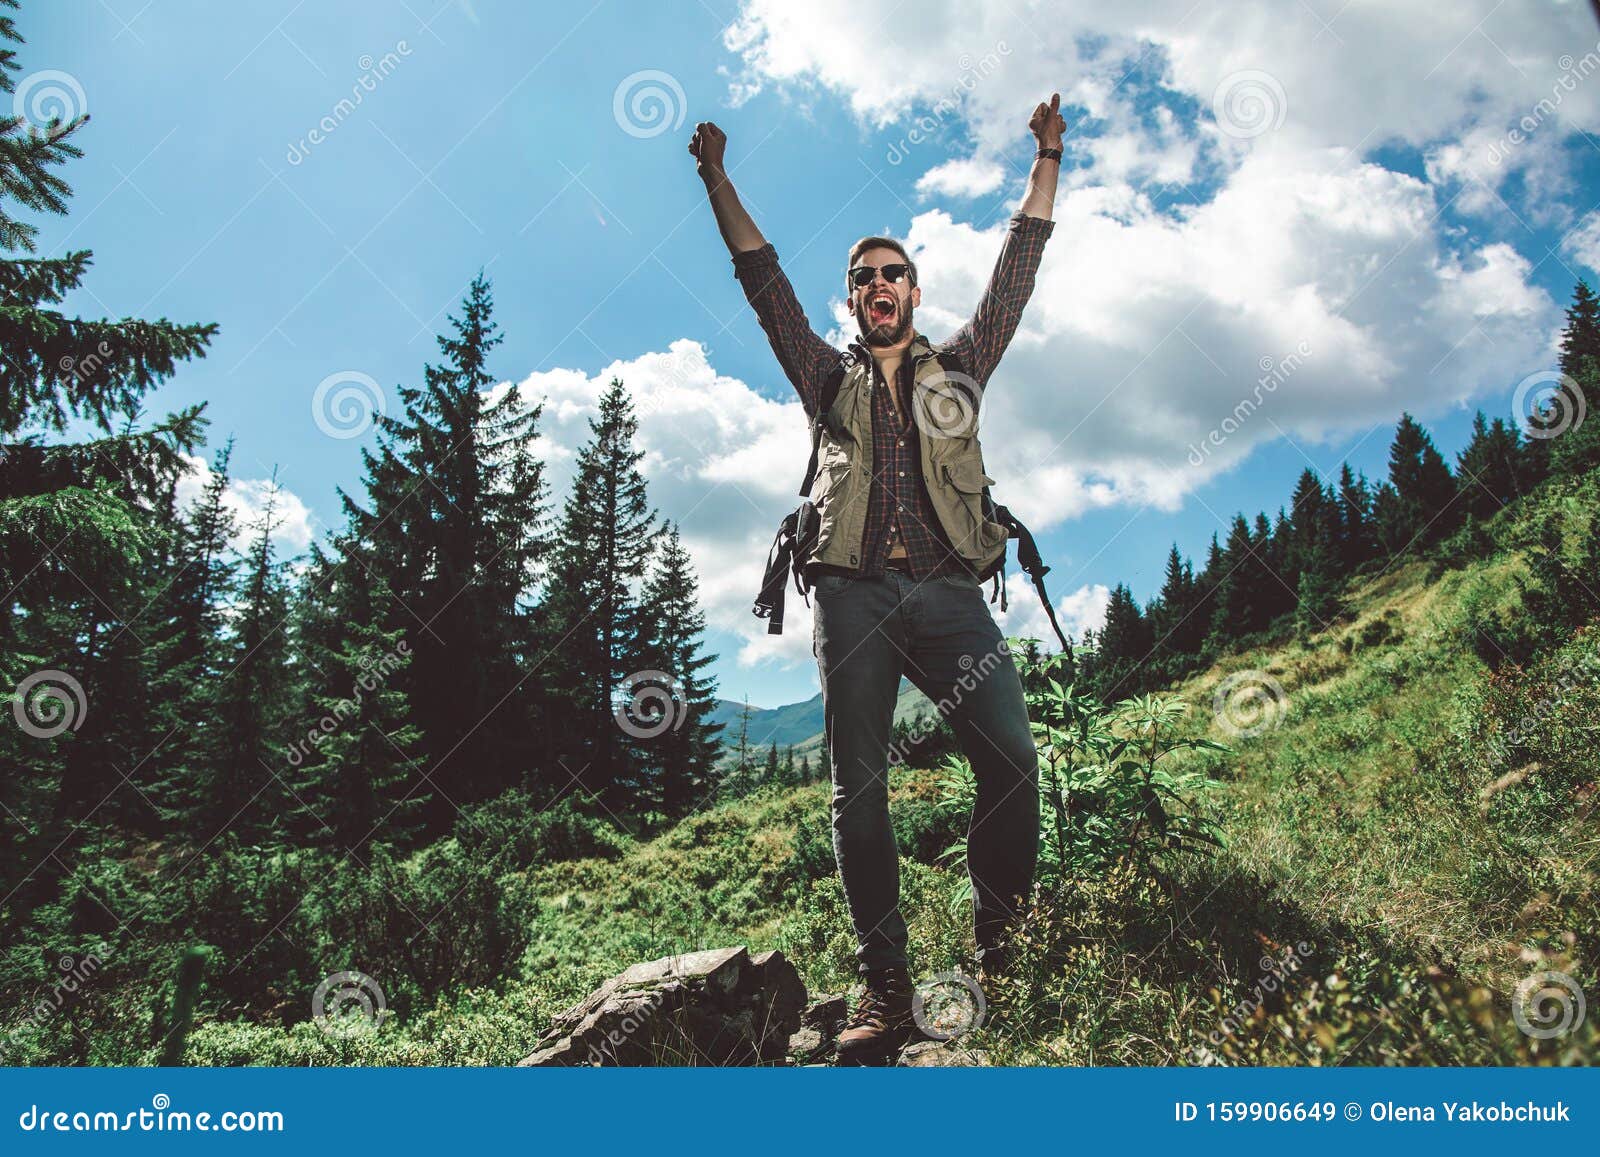 traveler man standing on green mountain hill